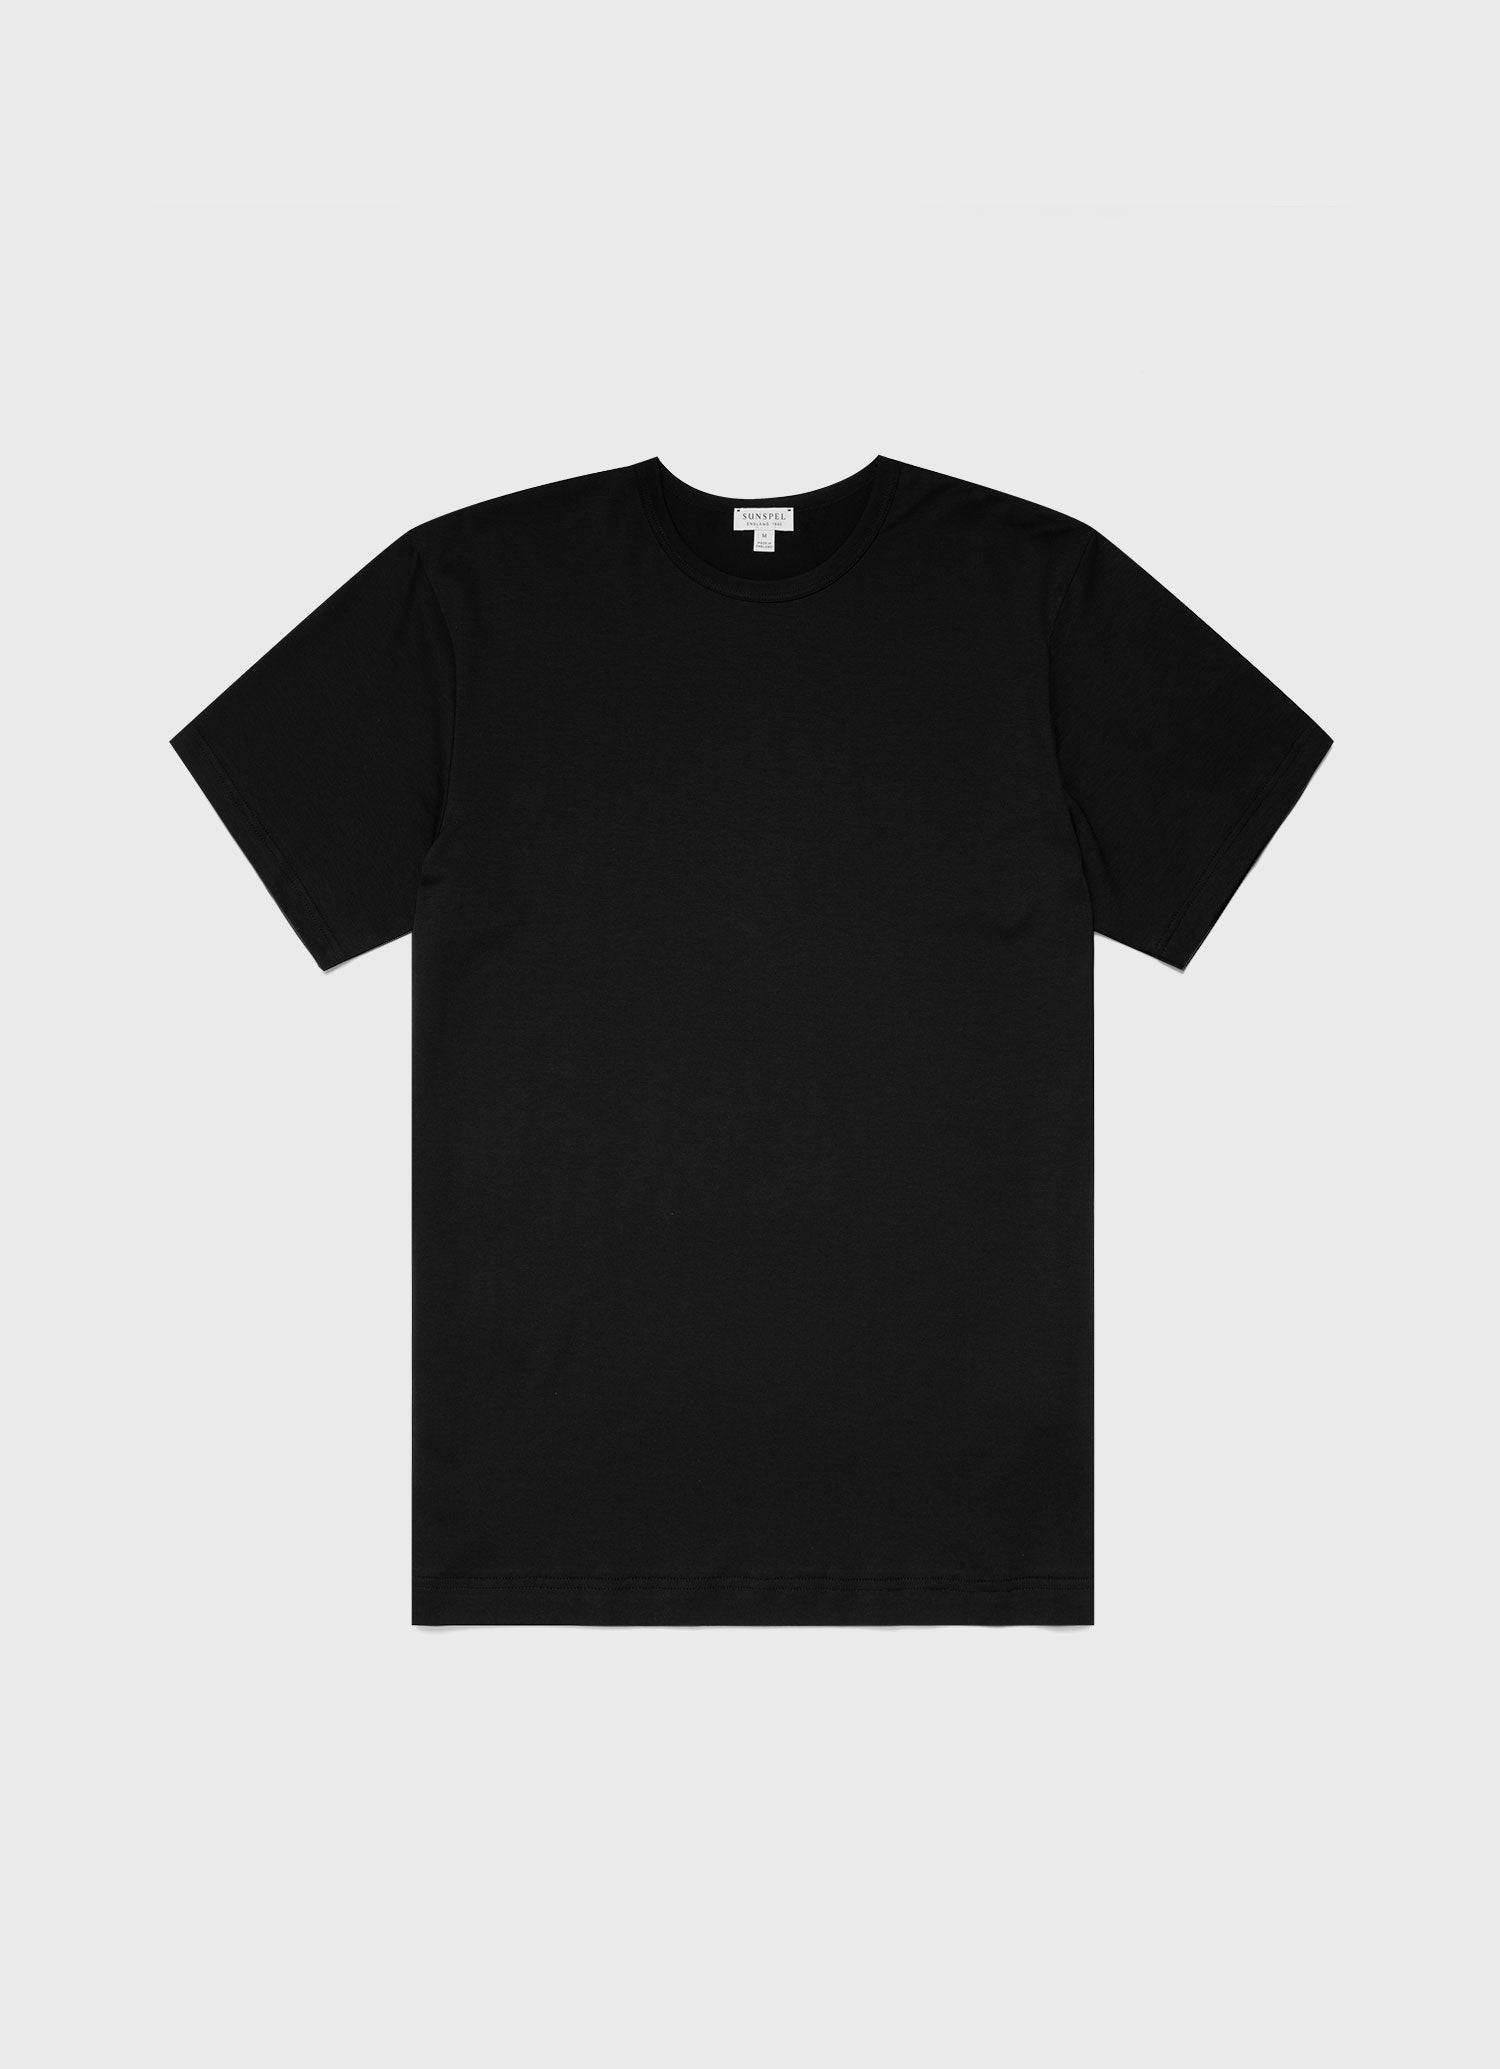 constante Jugar con algo Men's Classic T-shirt in Black | Sunspel